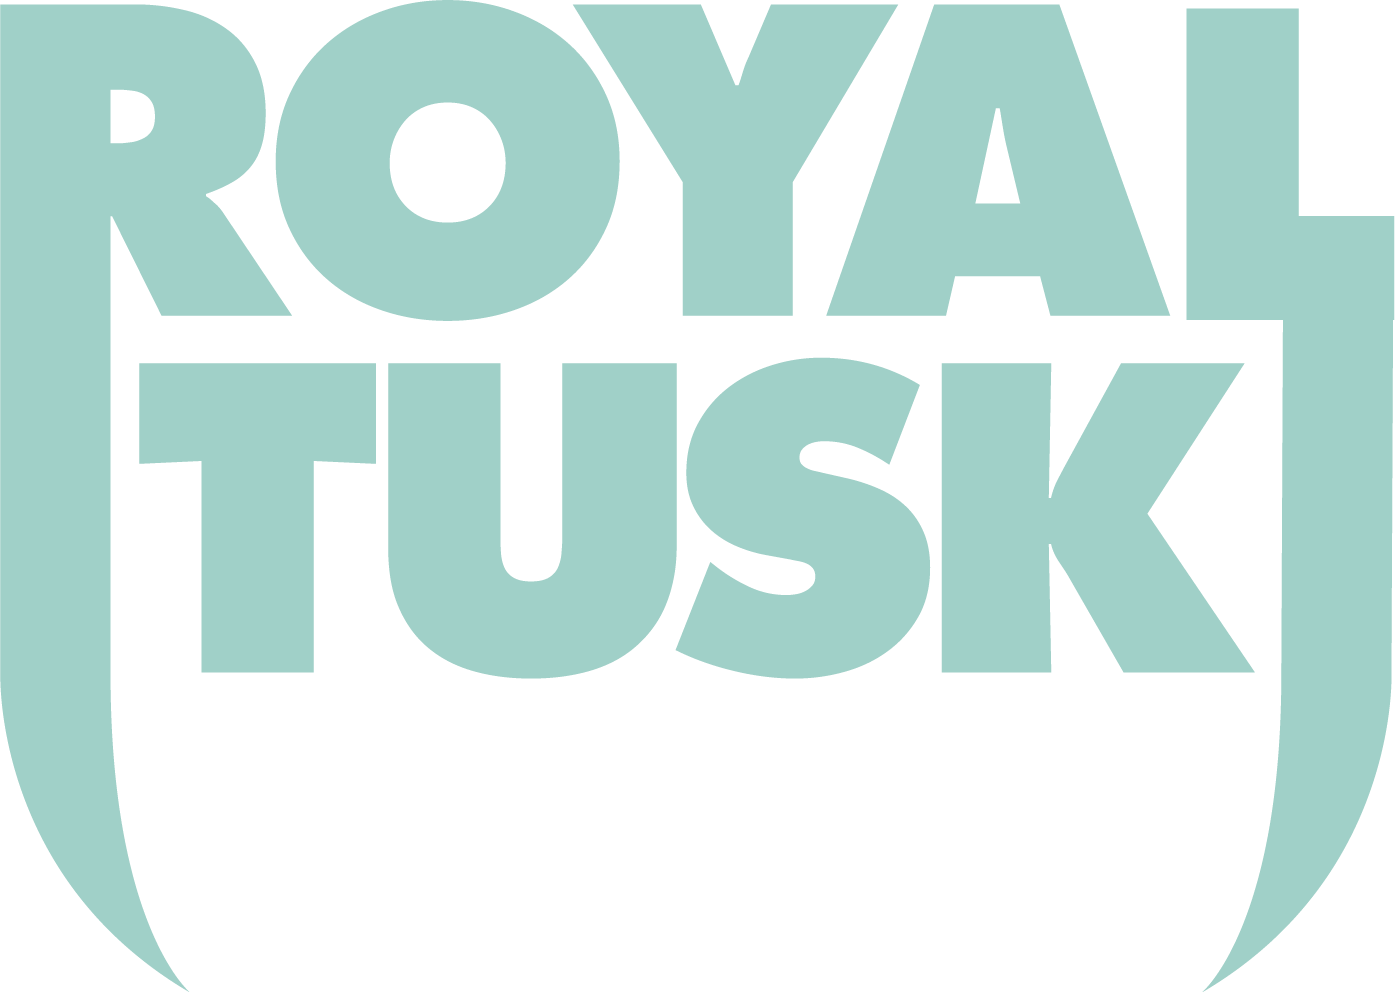 Royal Tusk | Official Website